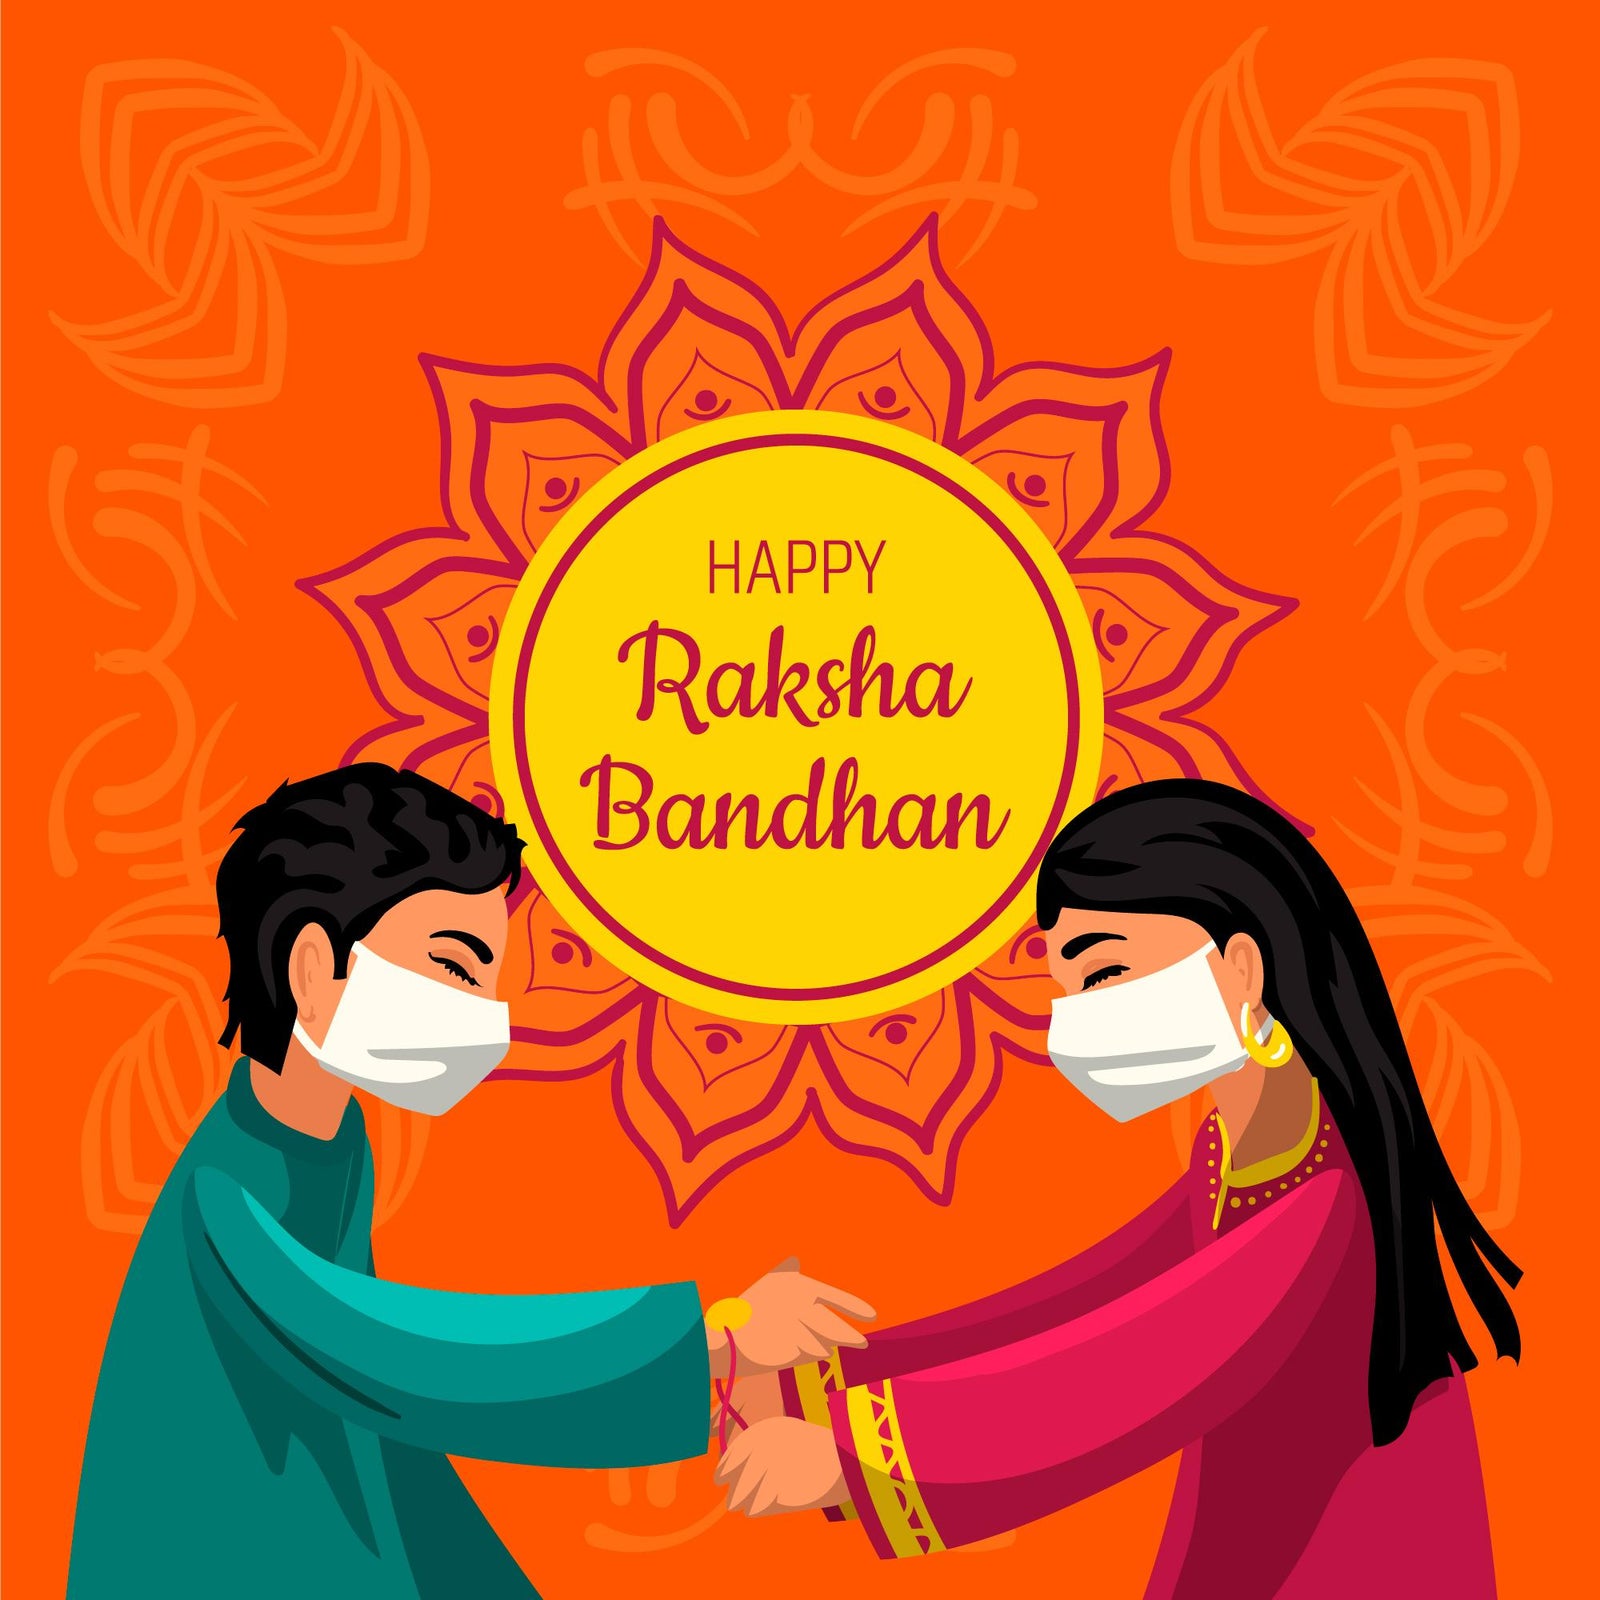 Raksha Bandhan 2023 - 10 Unique Personalized Rakhi Gifts For Your Sibling This Year